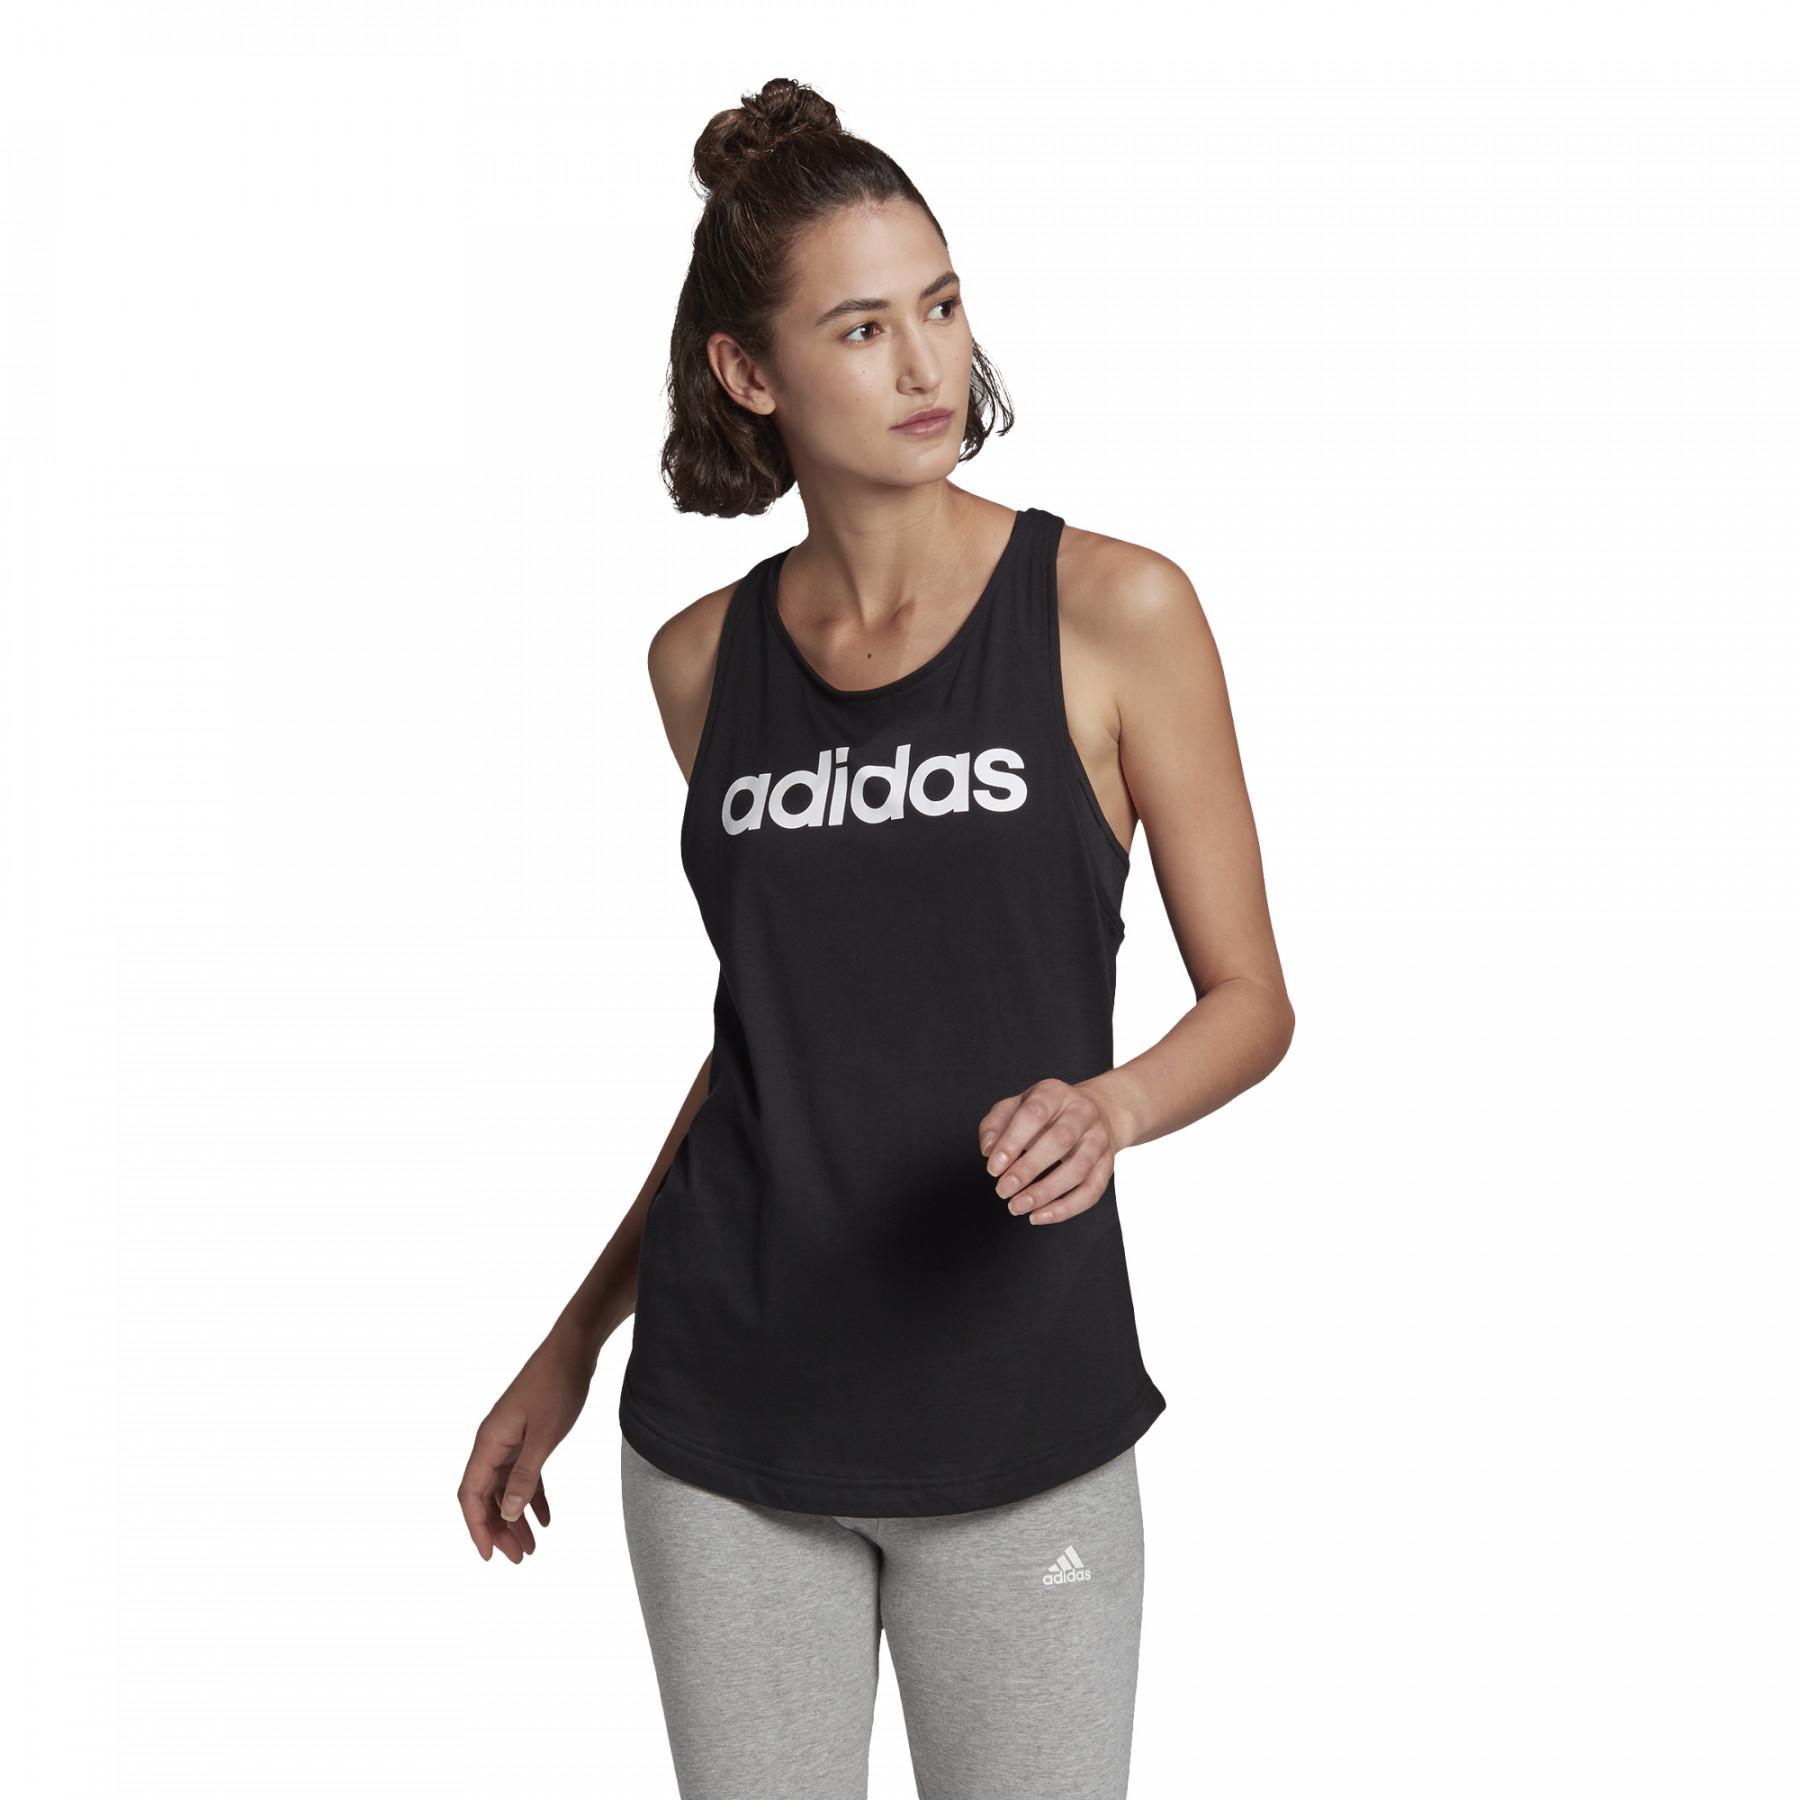 Women's tank top adidas Essentials Loose Logo - adidas - Brands -  Volleyball wear